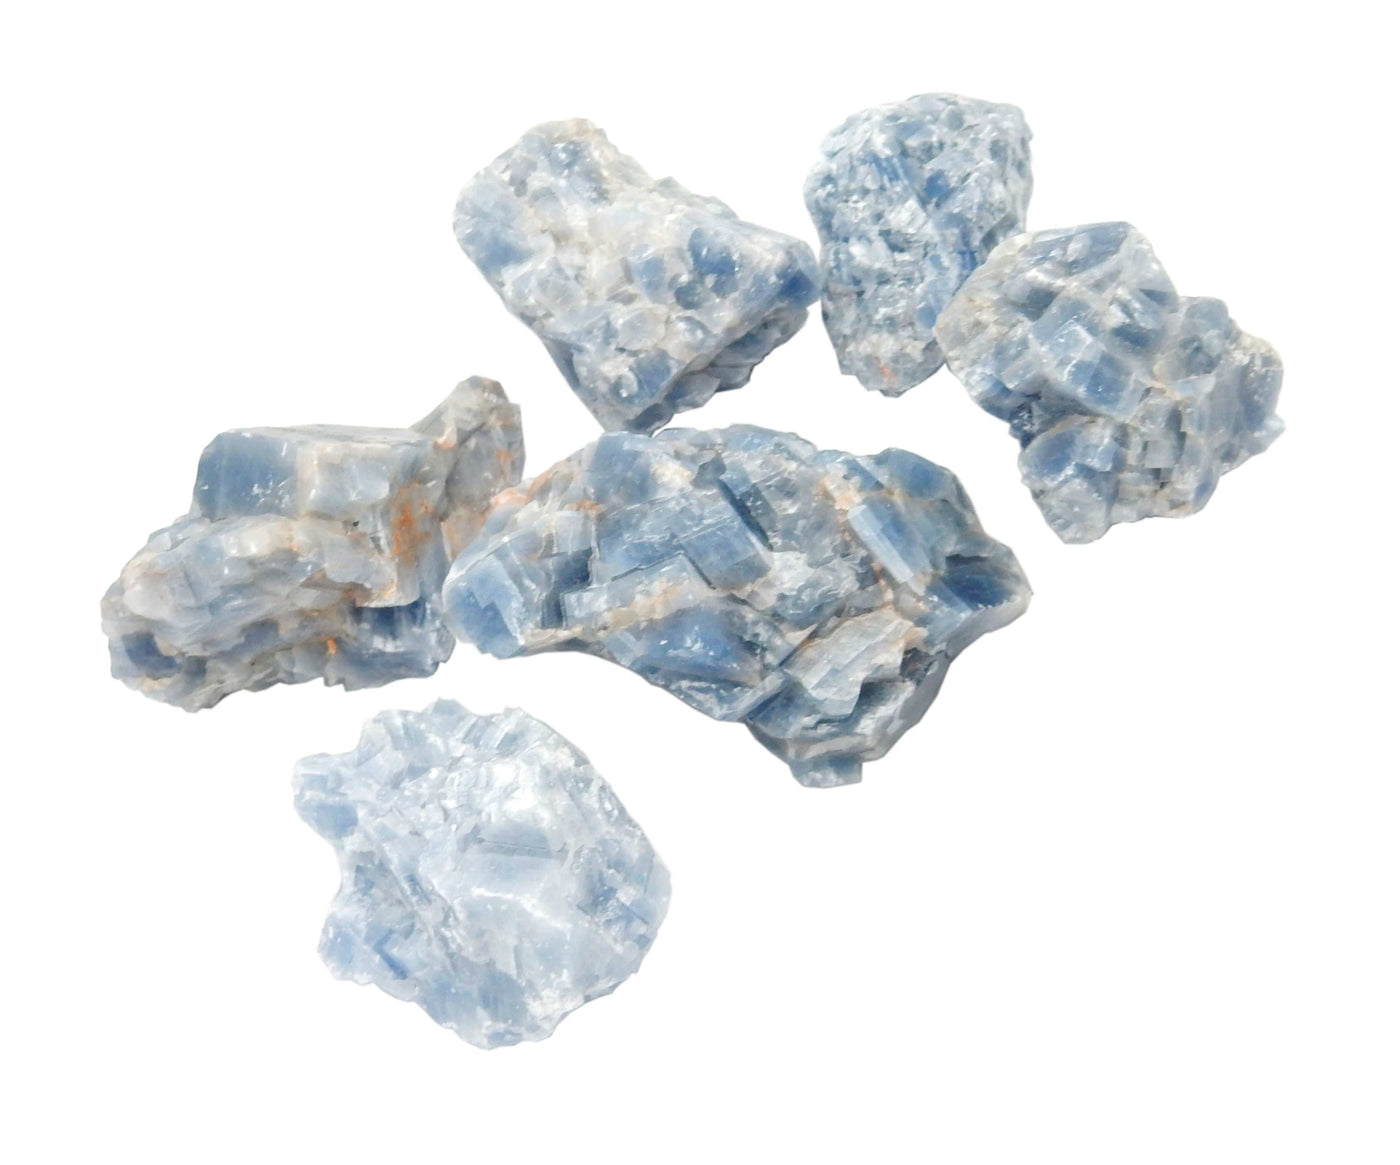 6 blue calcite stones on white background